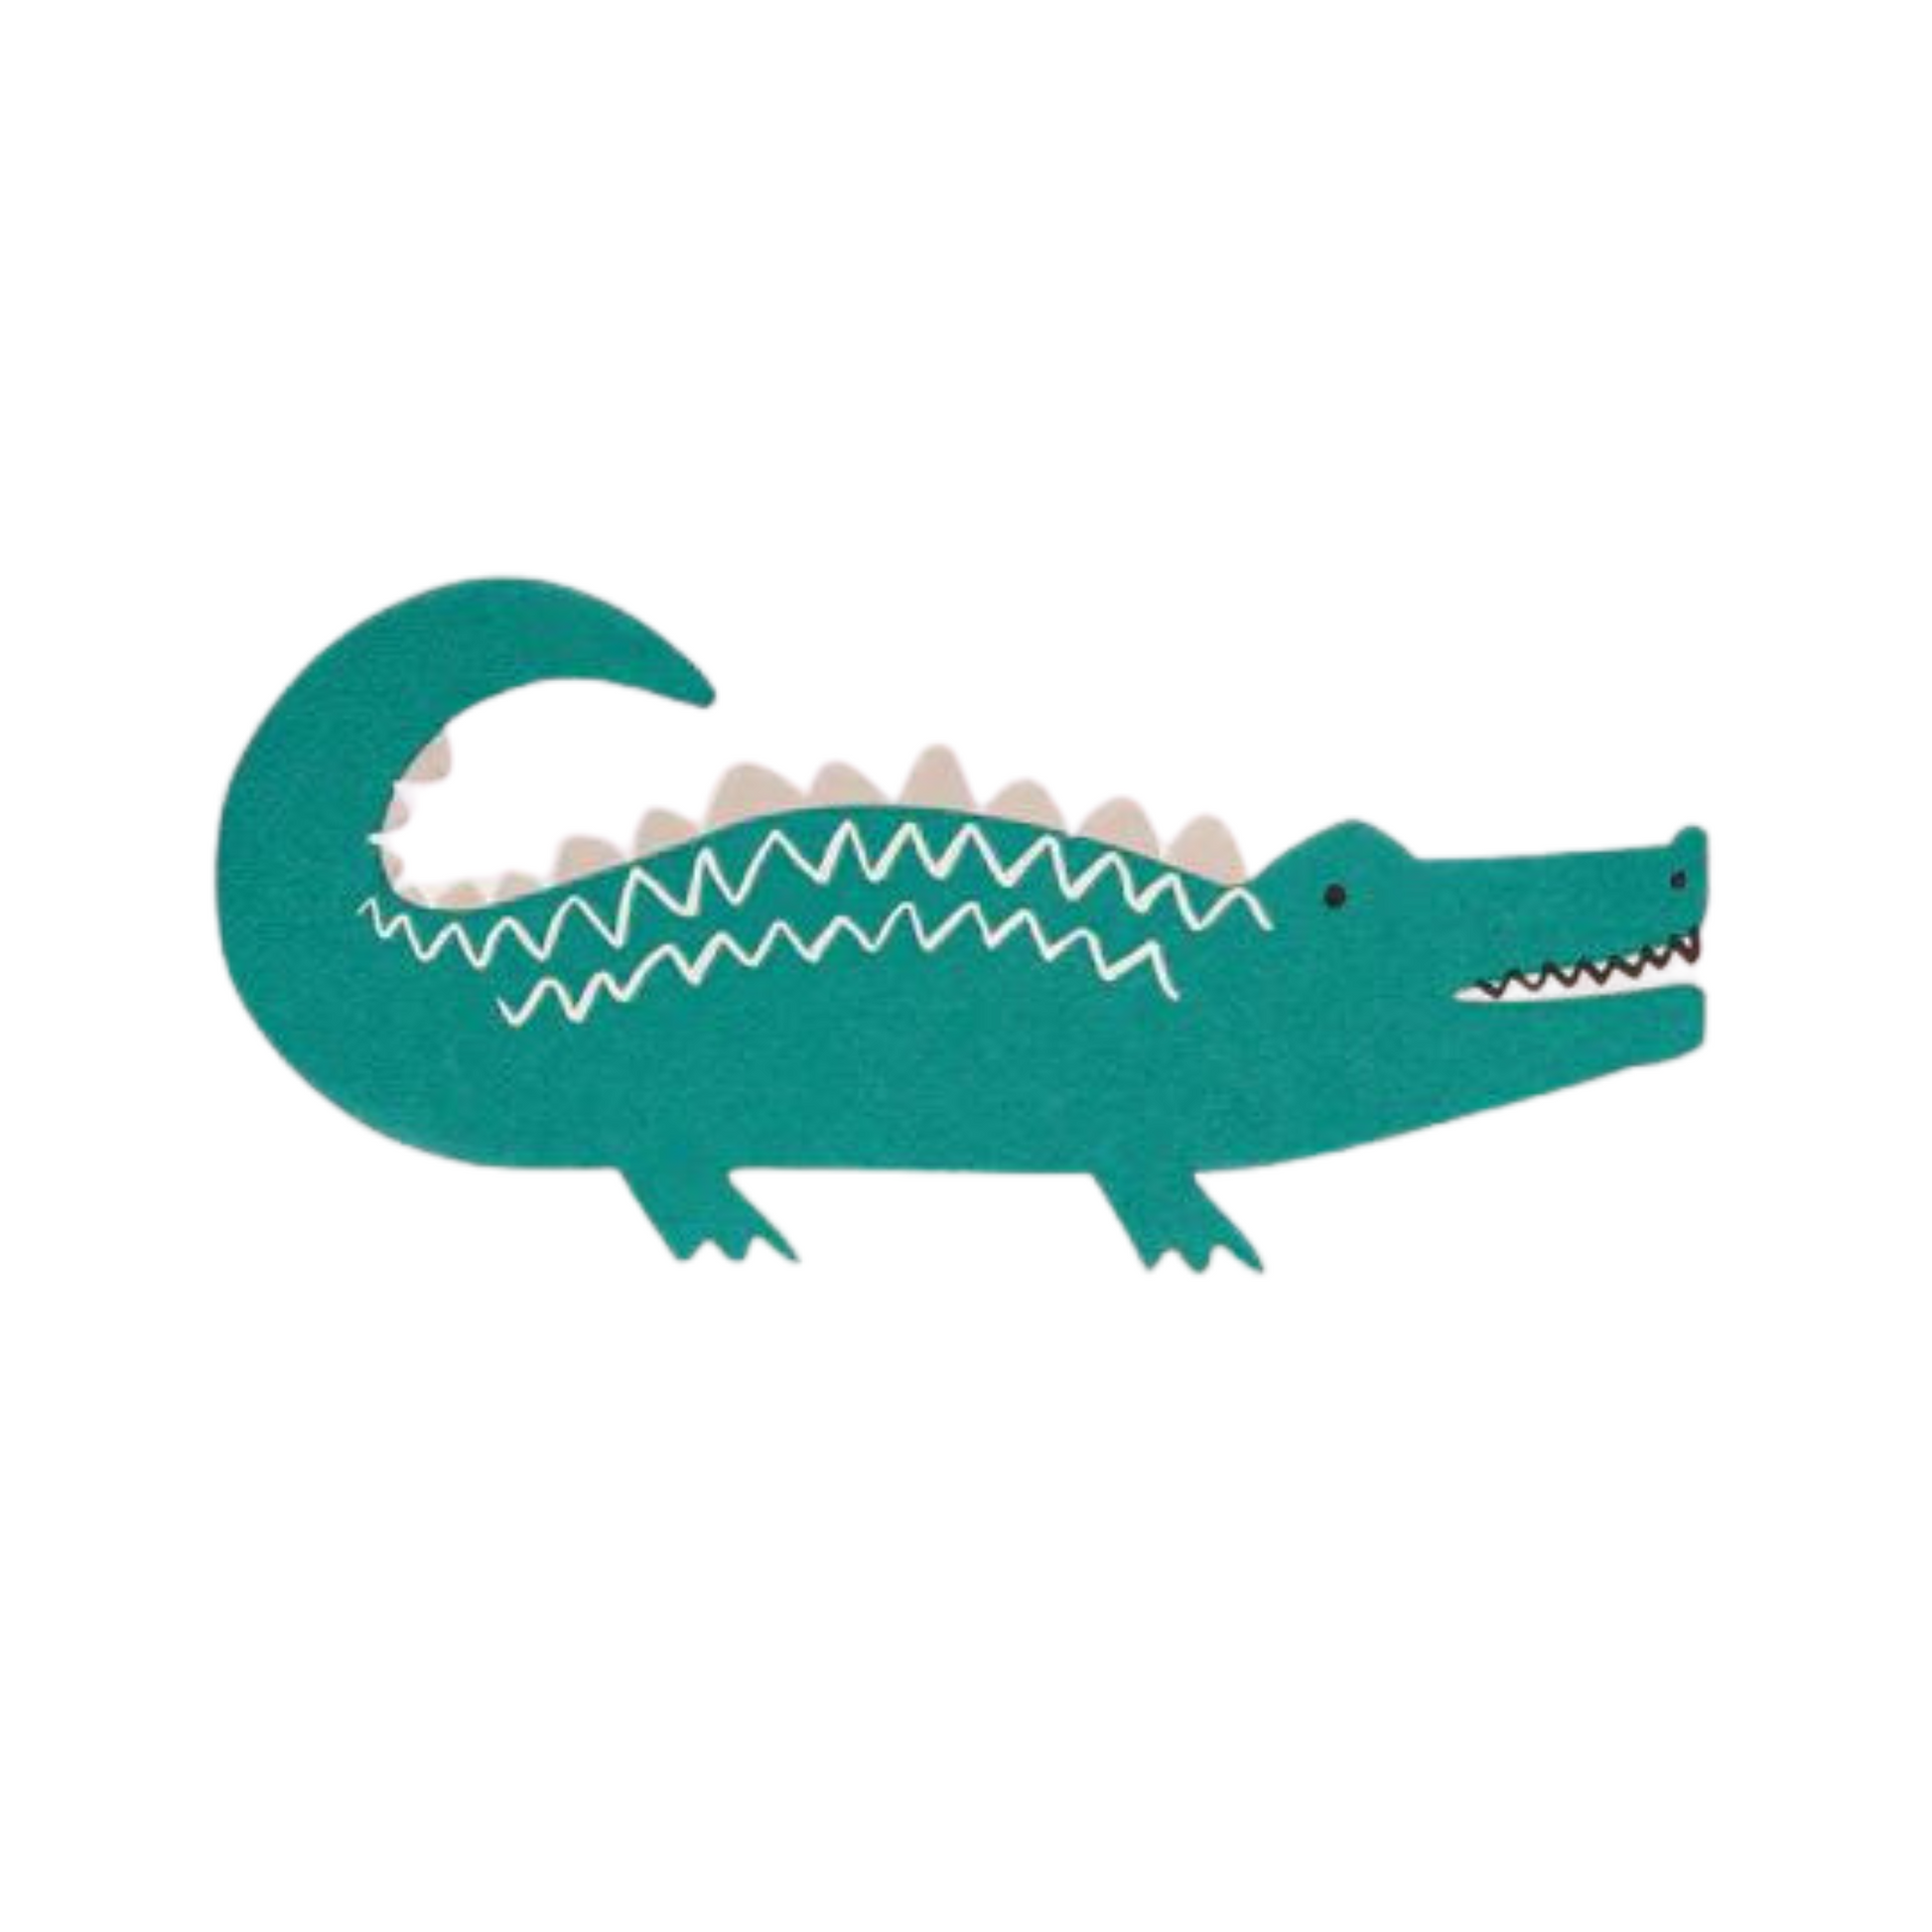 crocodile shaped napkins by meri meri